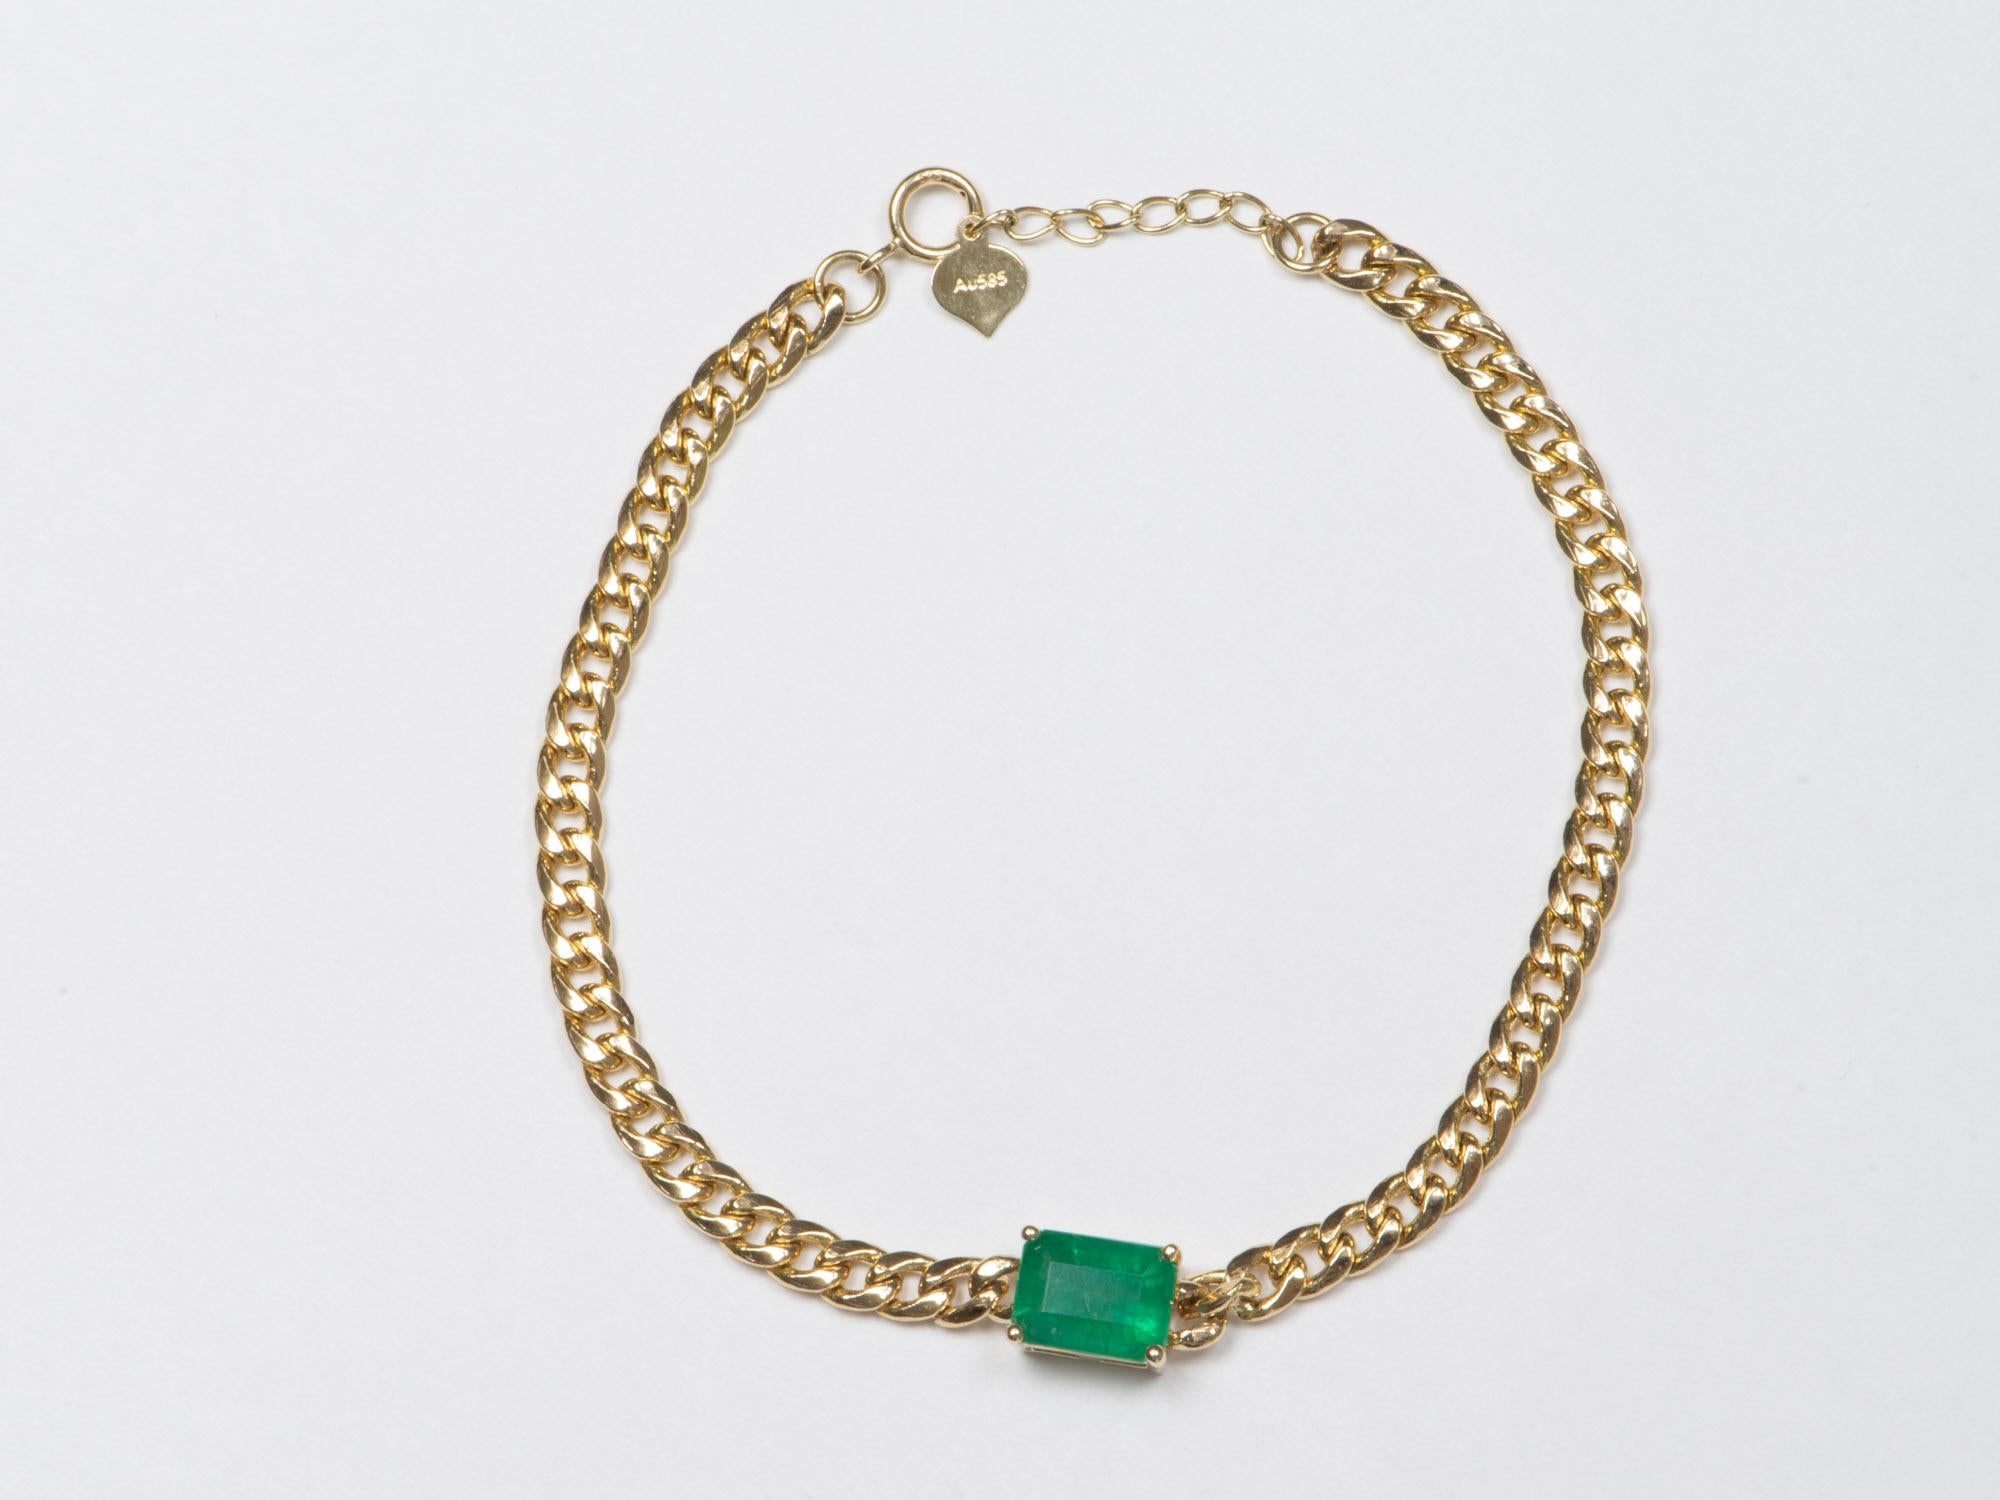 Emerald Cut 1.7ct Zambian Emerald Bracelet on Miami Cuban Chain 14K Gold R4472 For Sale